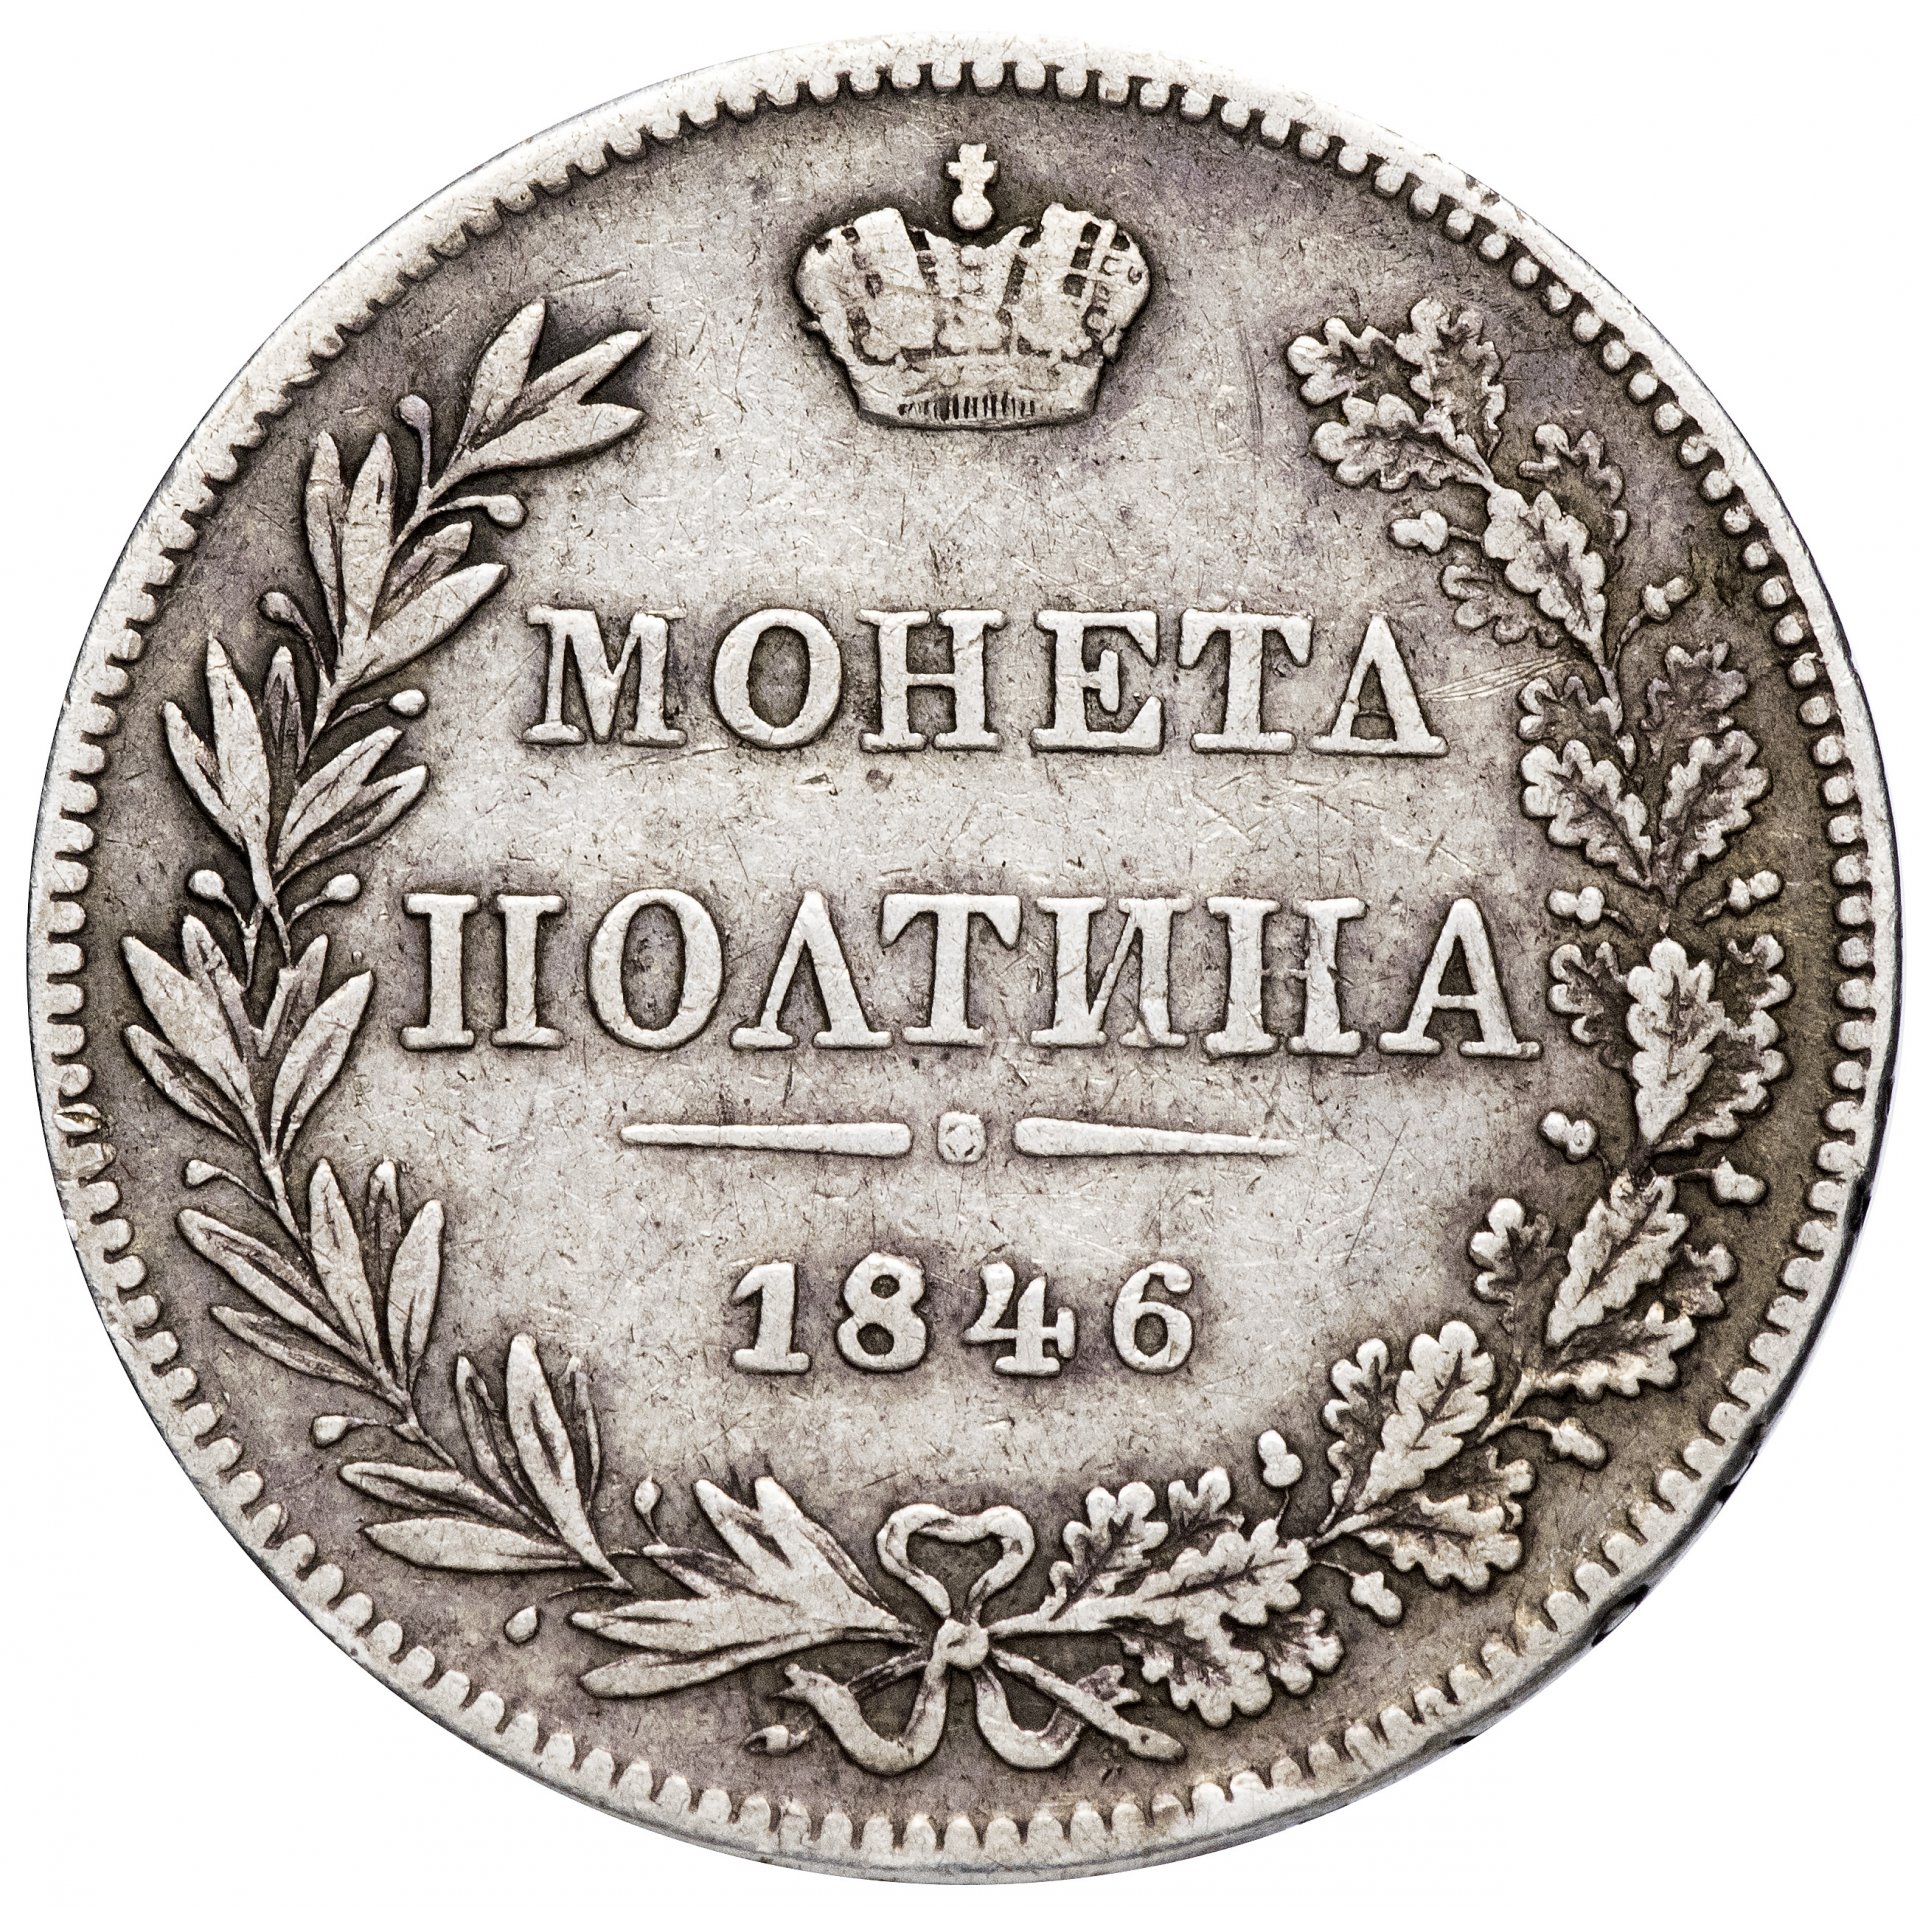 Полтина. Полтина 1846. Полтина 1846 года MW. Монета полтина 1880. Серебряная монета 1846 год.